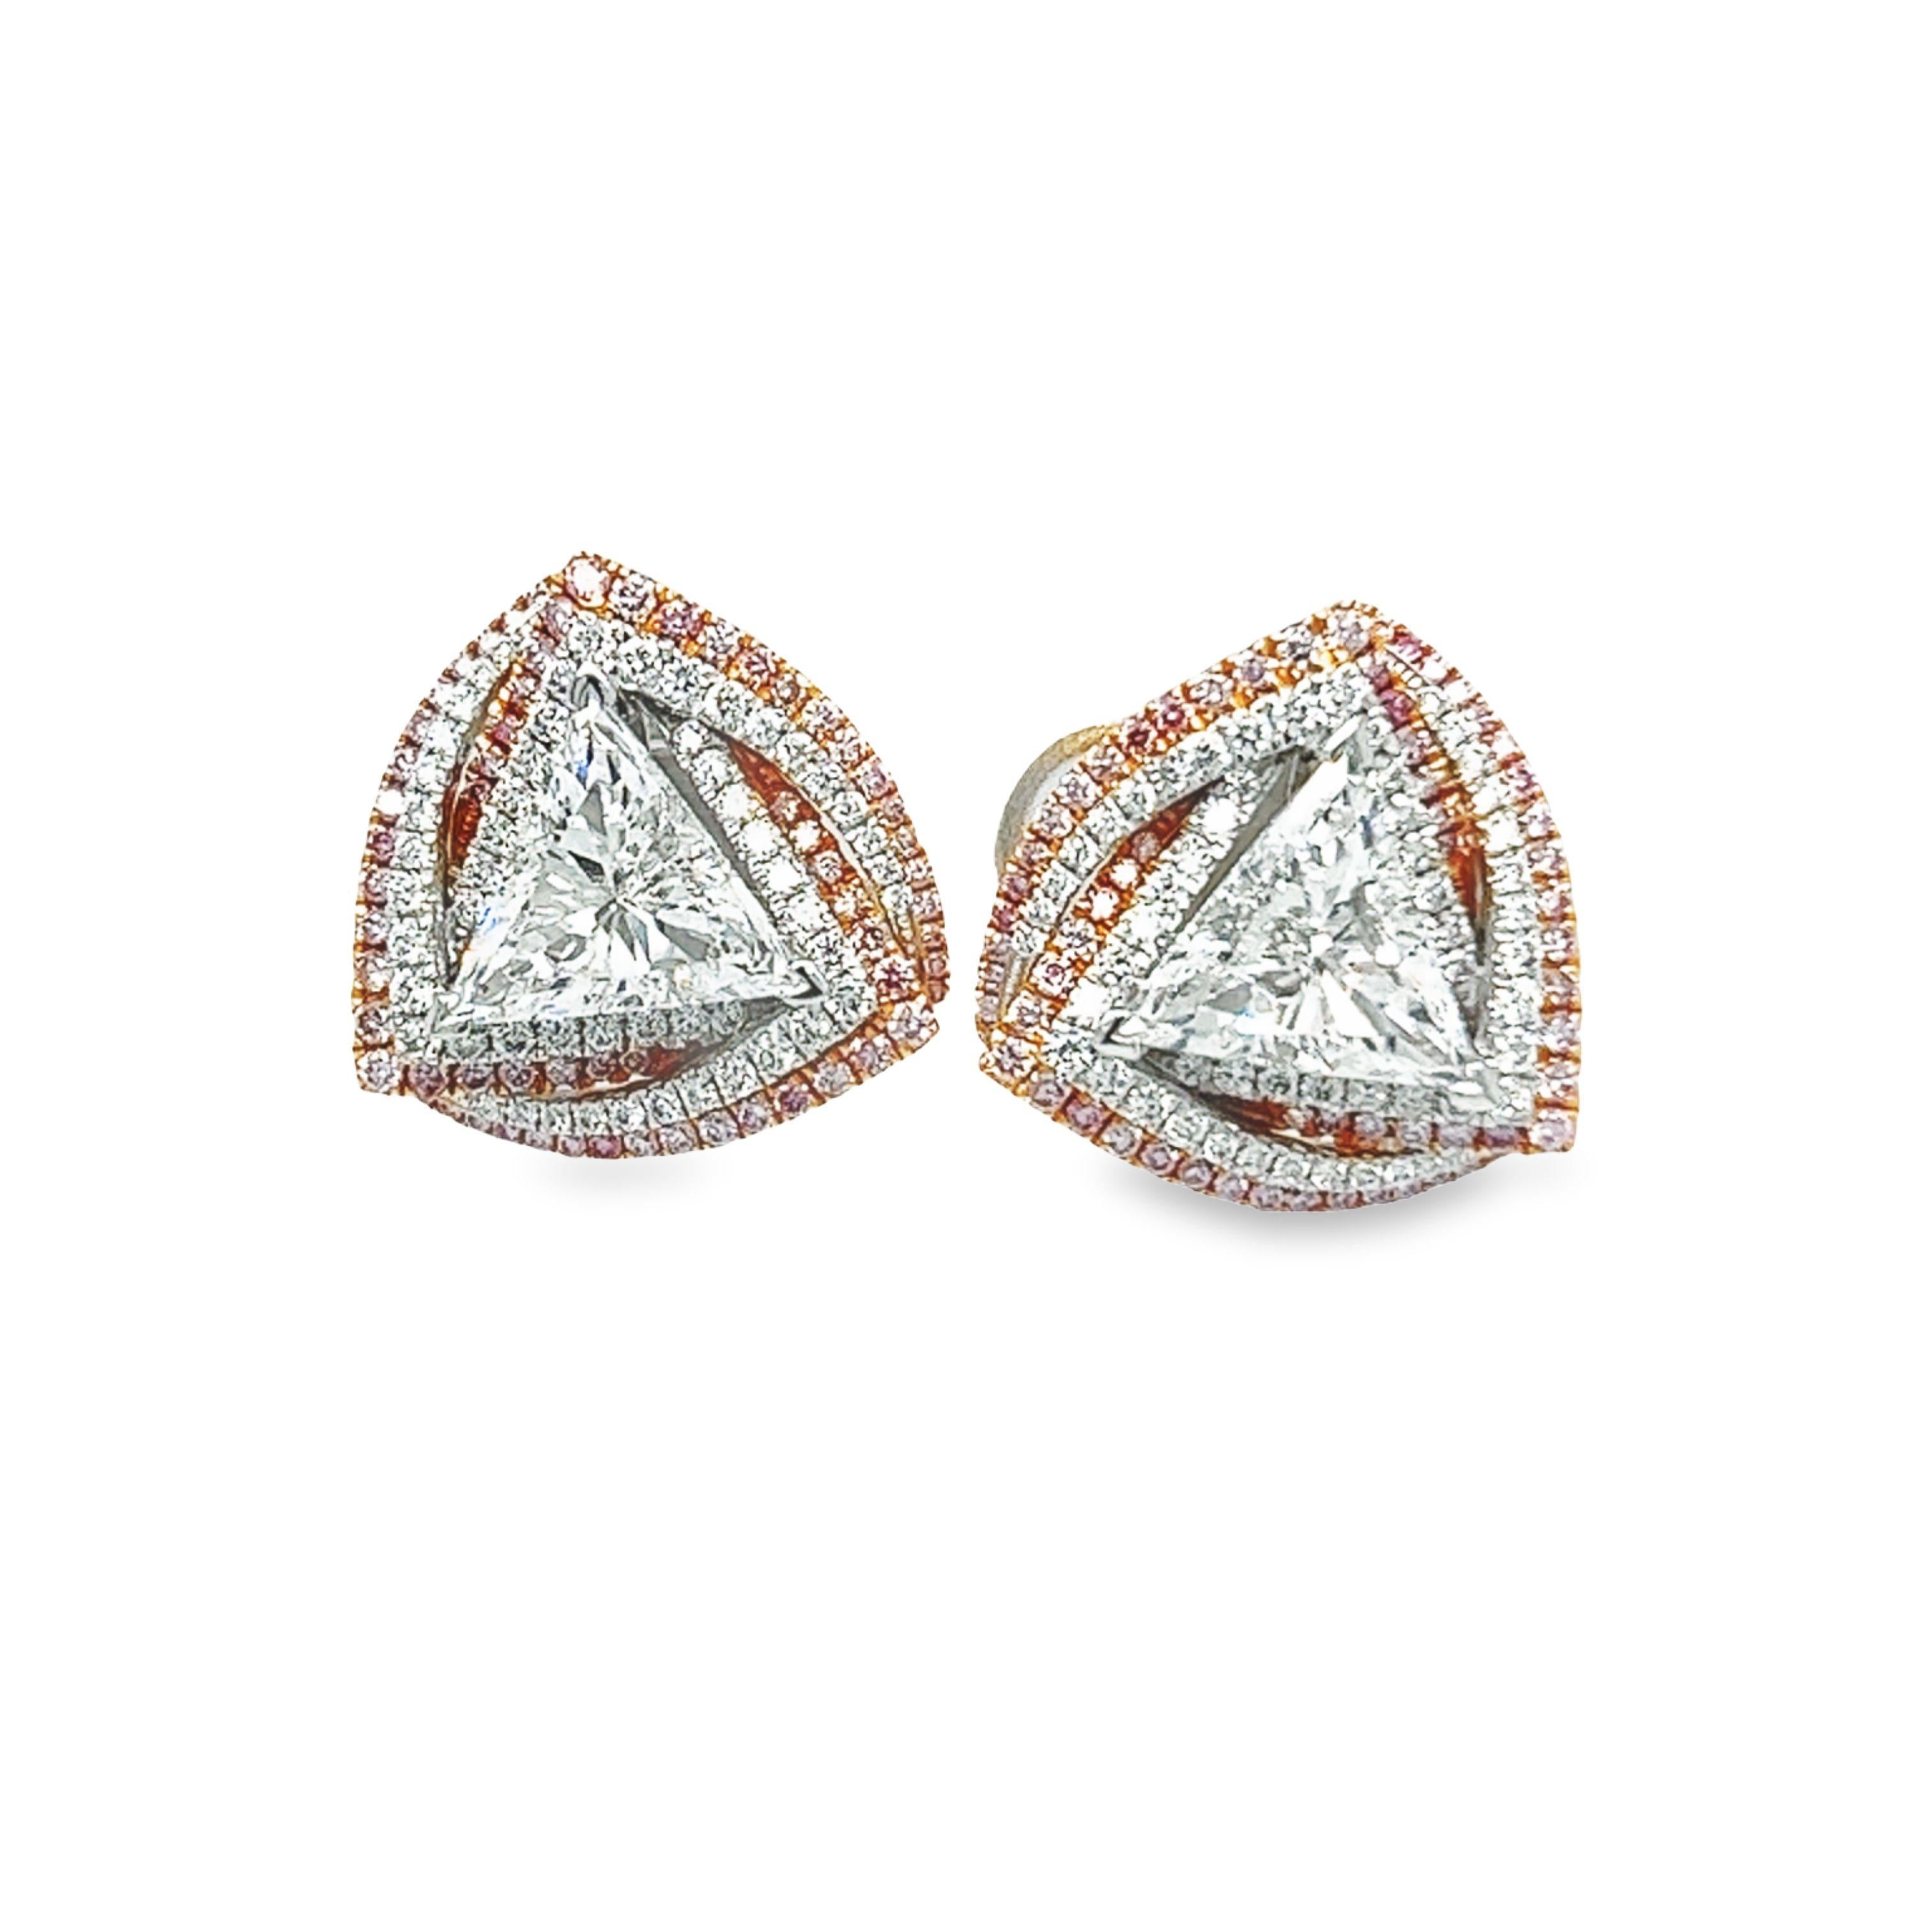 David Rosenberg 2.48 Carat White & Pink GIA Triangle Diamond Stud Earring For Sale 1